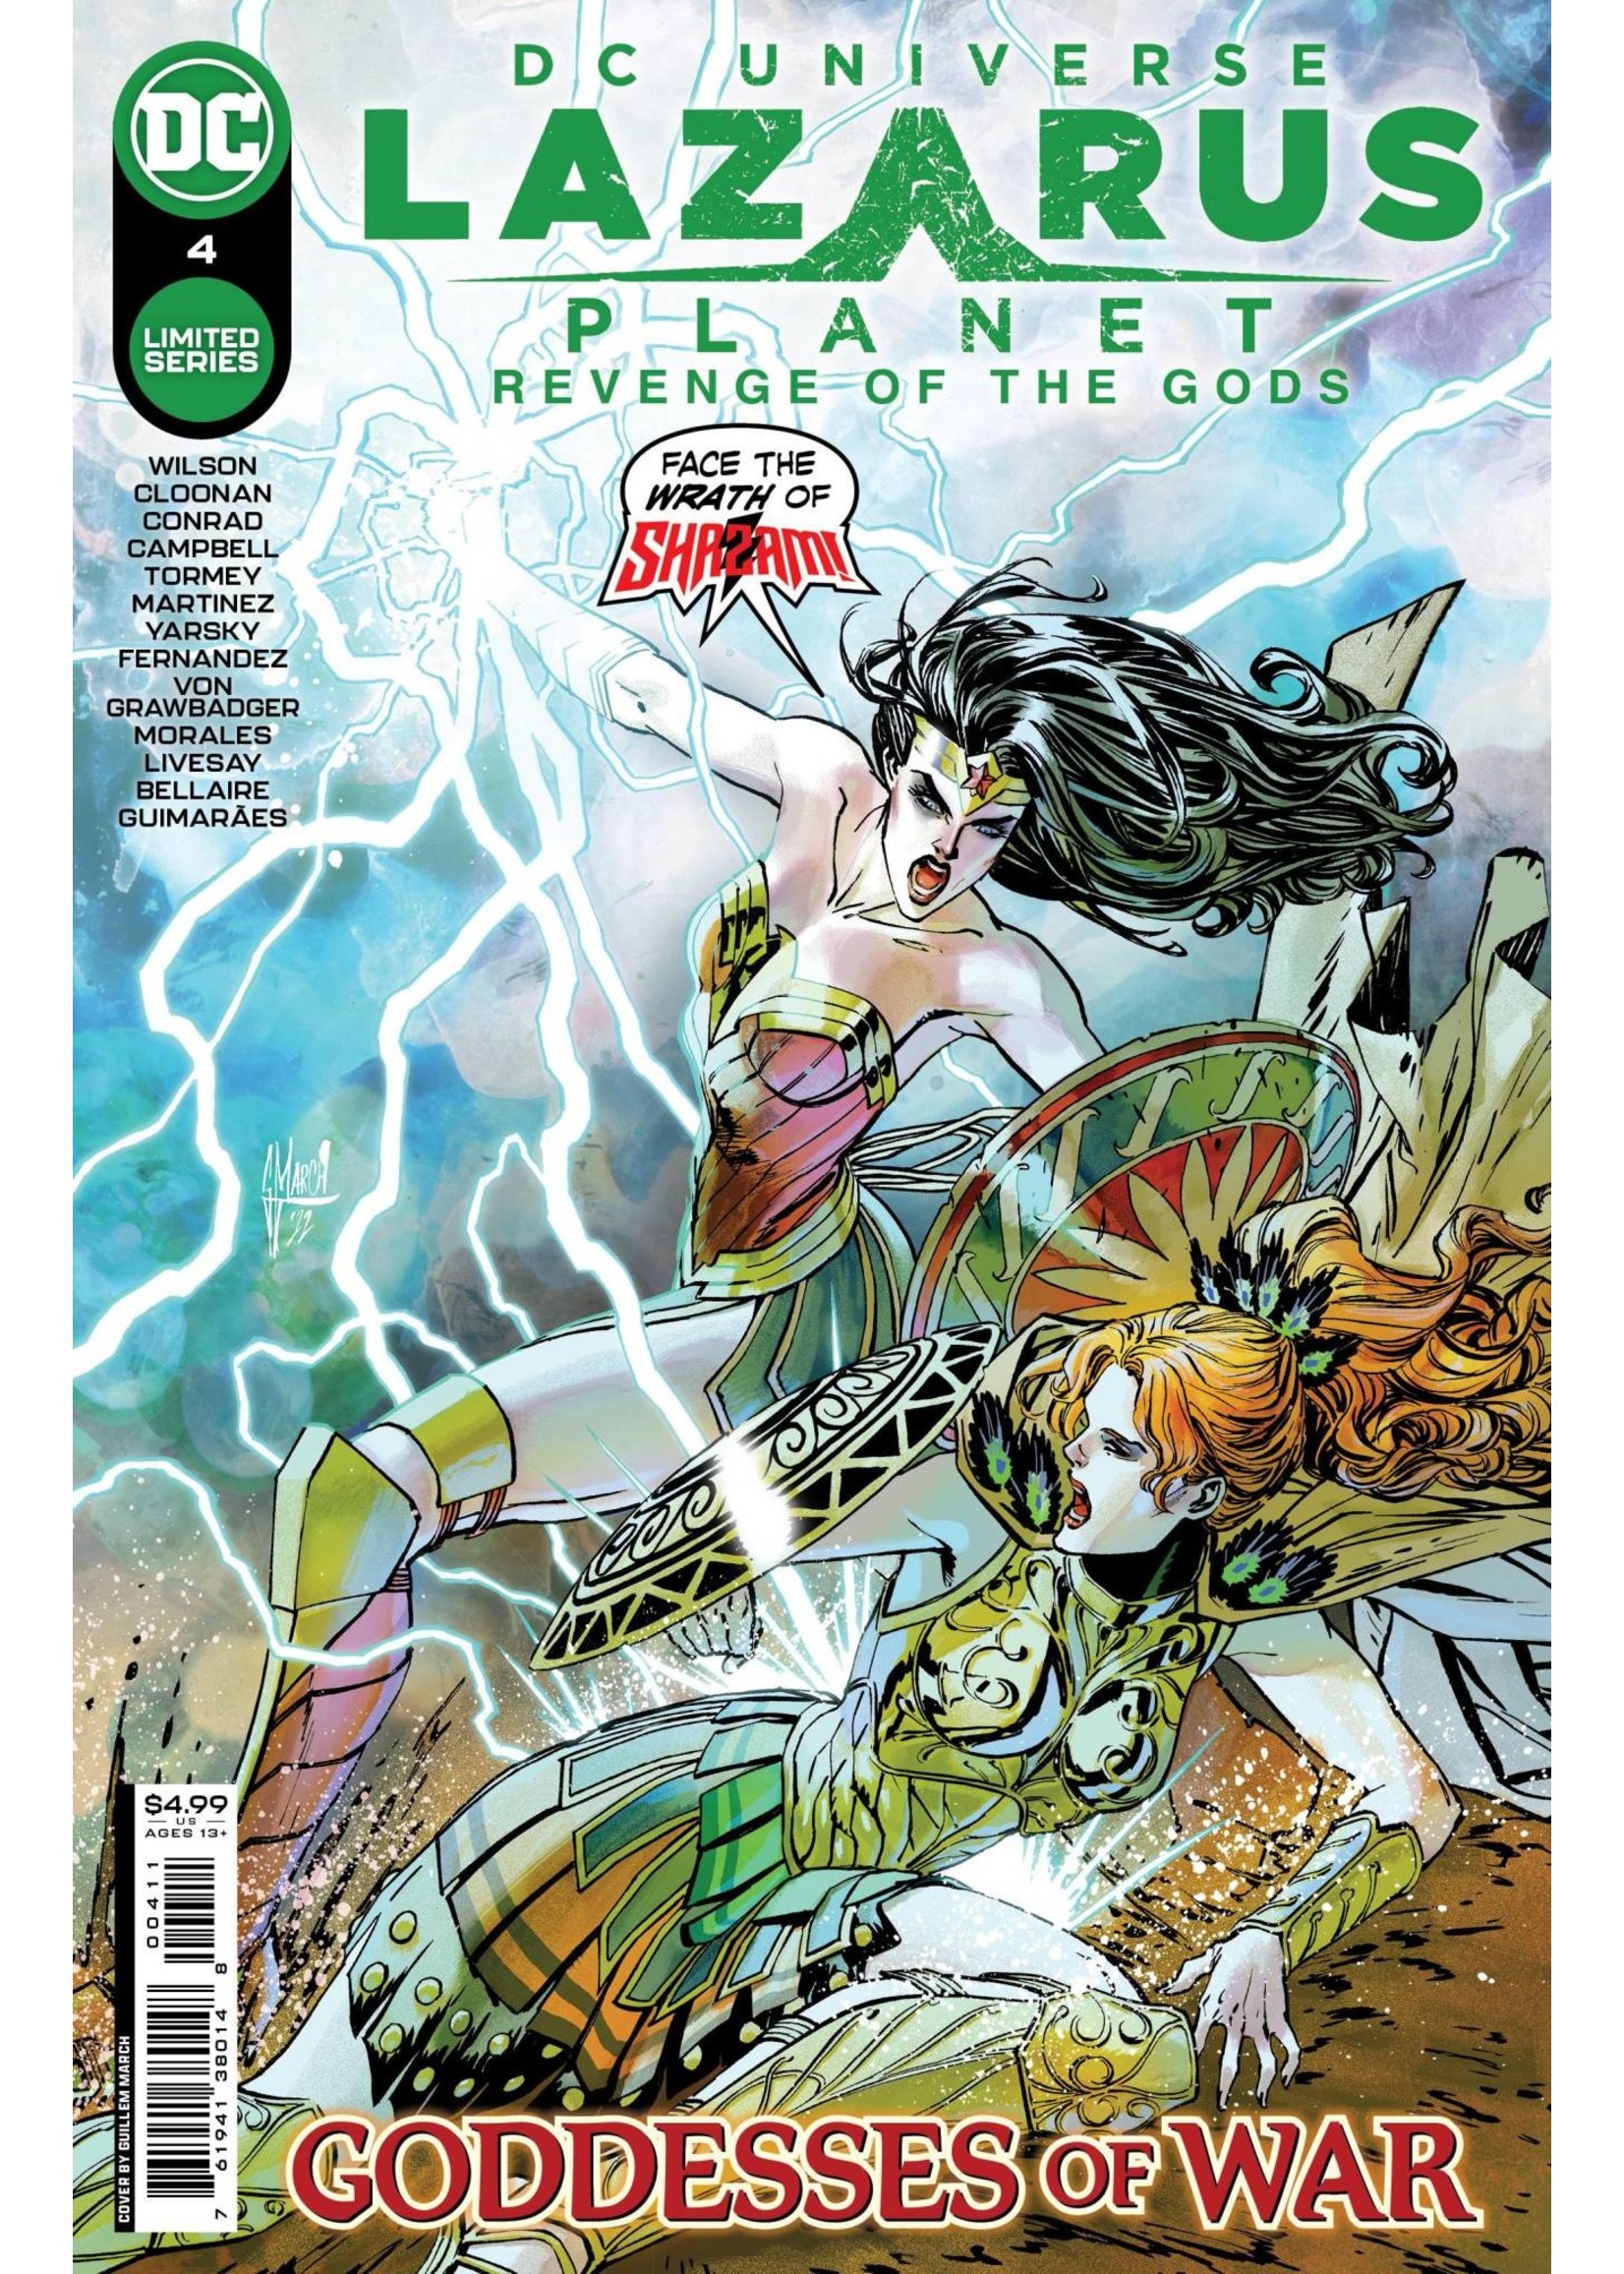 DC COMICS LAZARUS PLANET REVENGE OF THE GODS #4